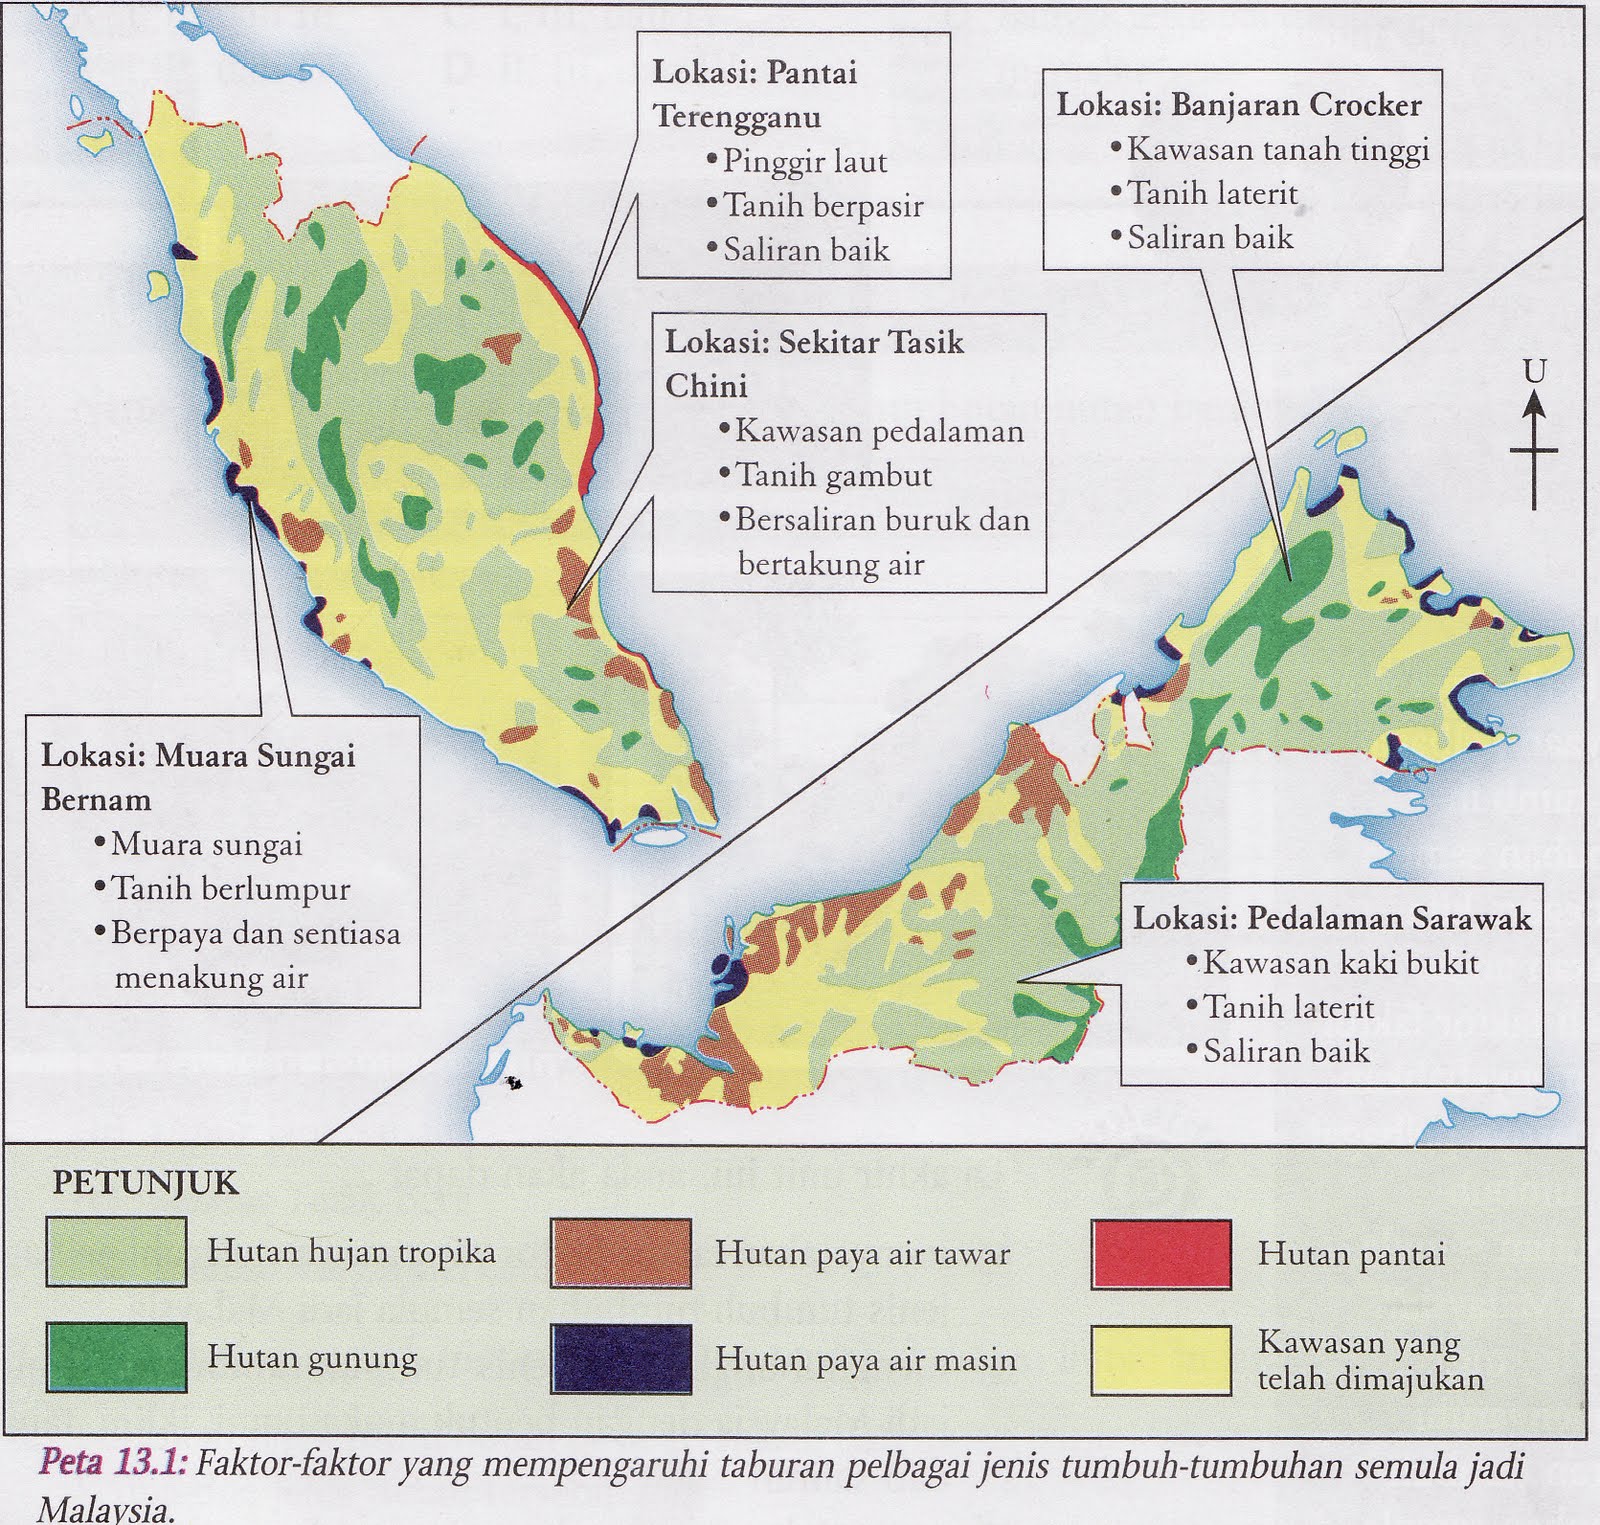 Tinta-tinta Ilmu: Hutan Hujan Tropika